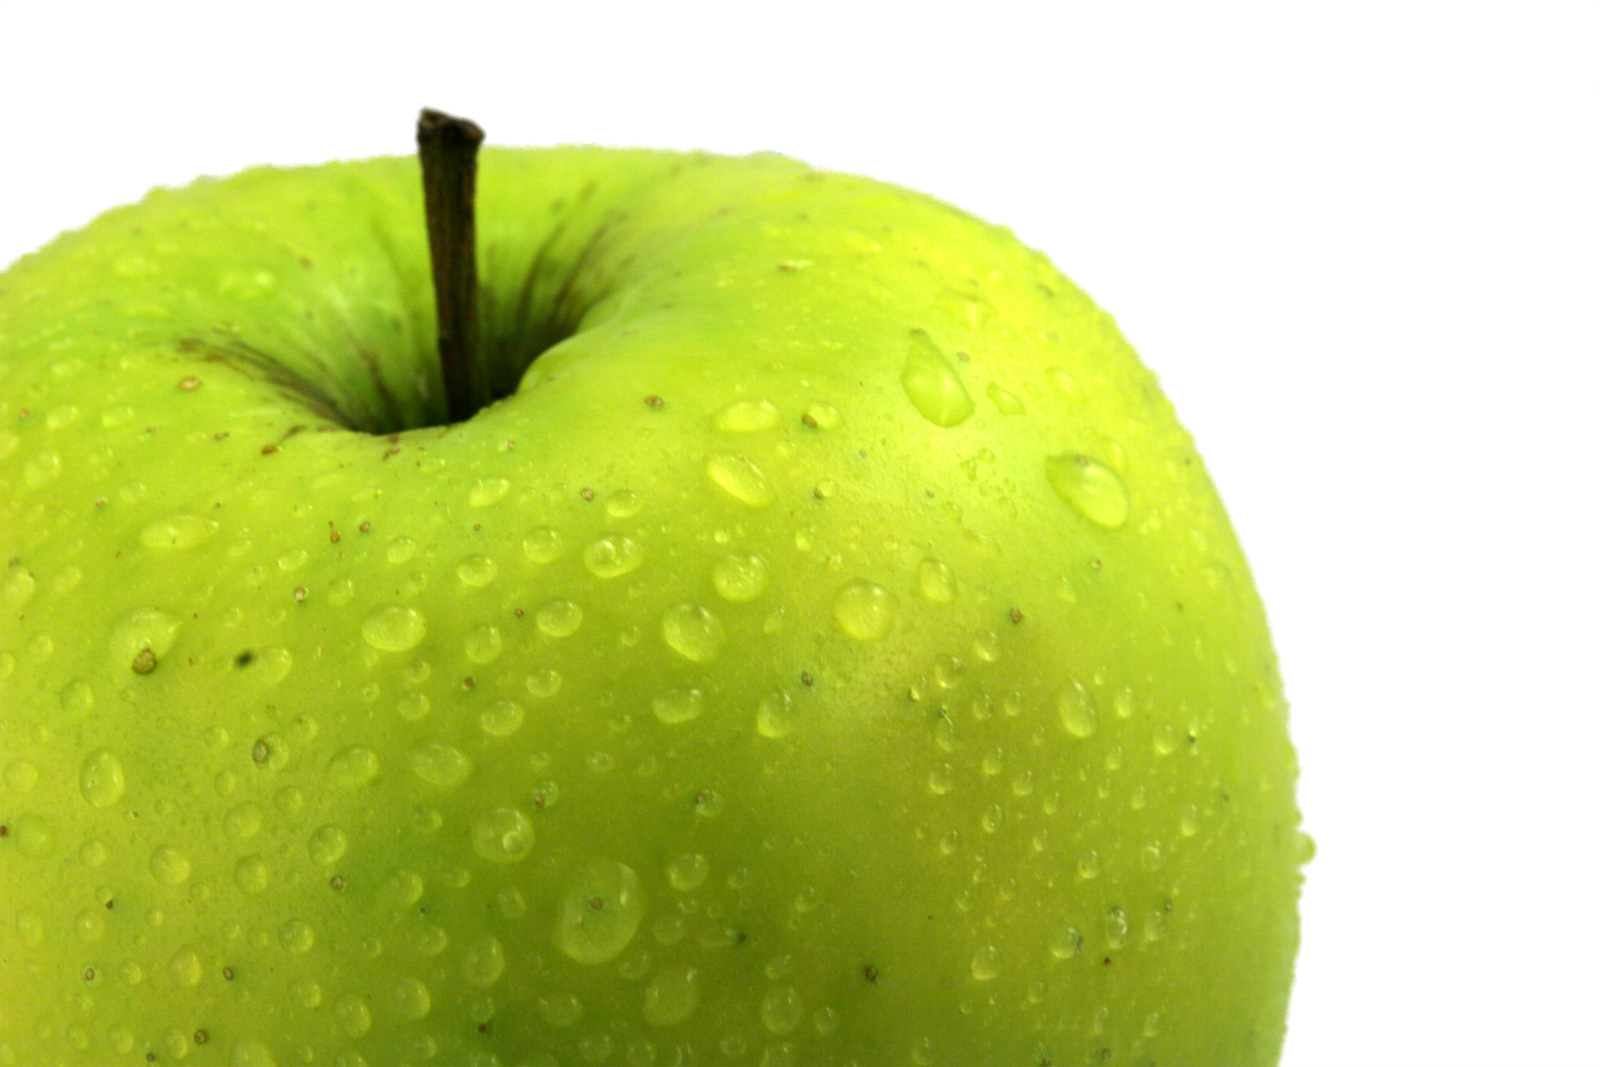 Green apple photo